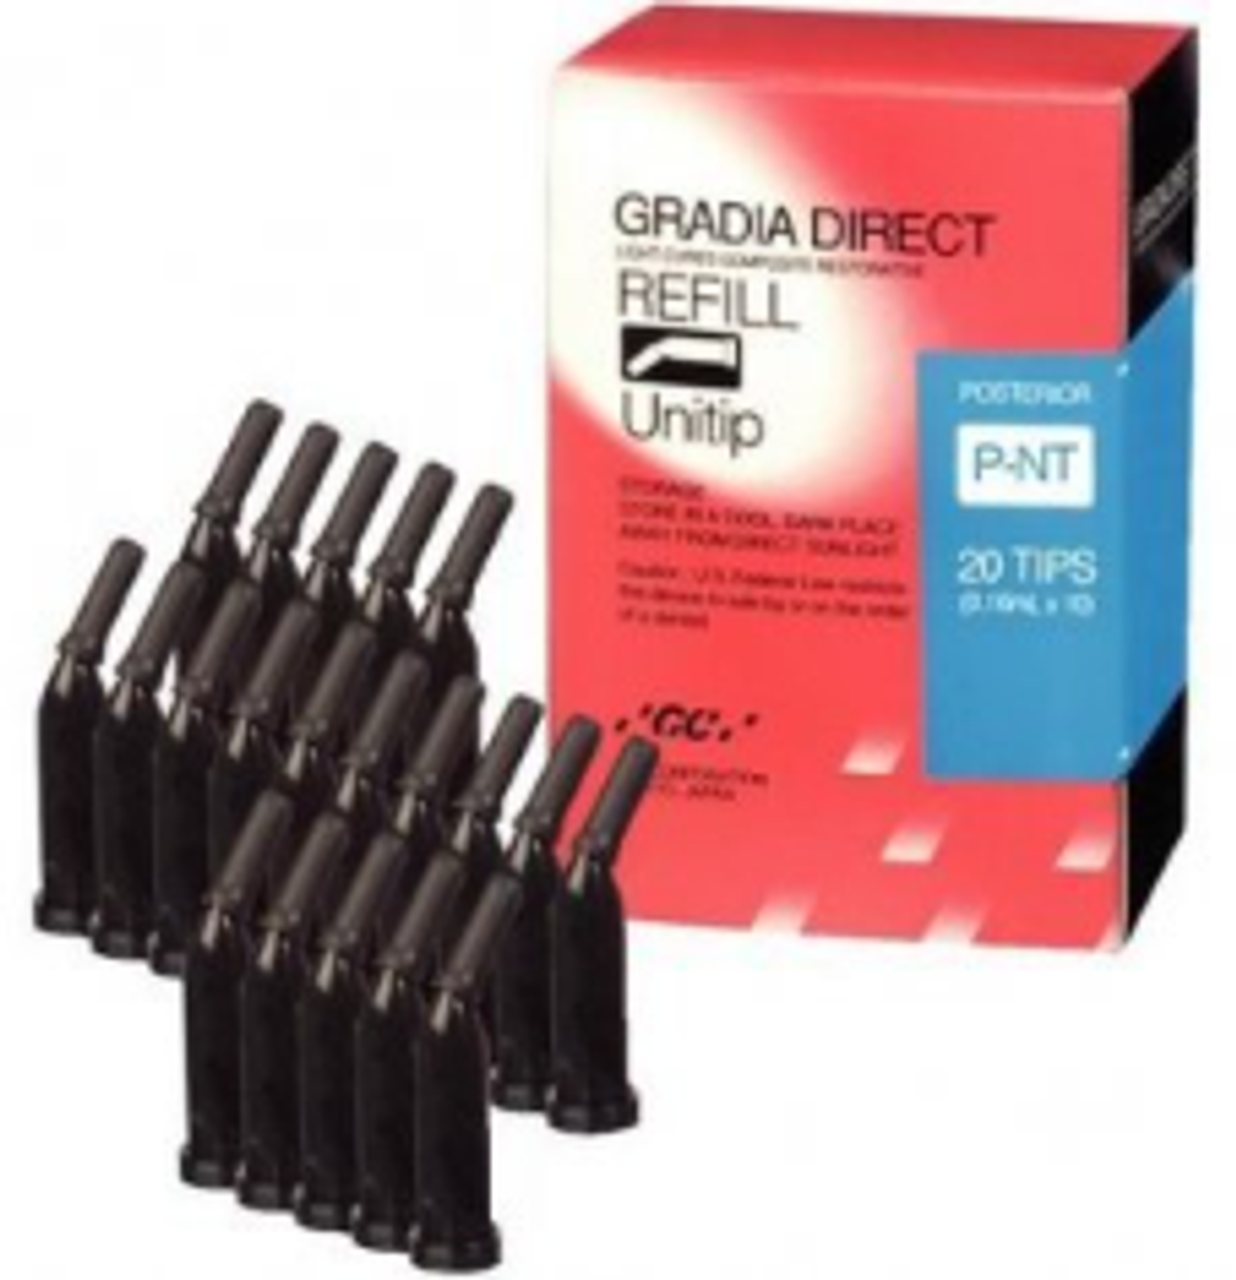 GRADIA DIRECT Unitip P-NT (20)